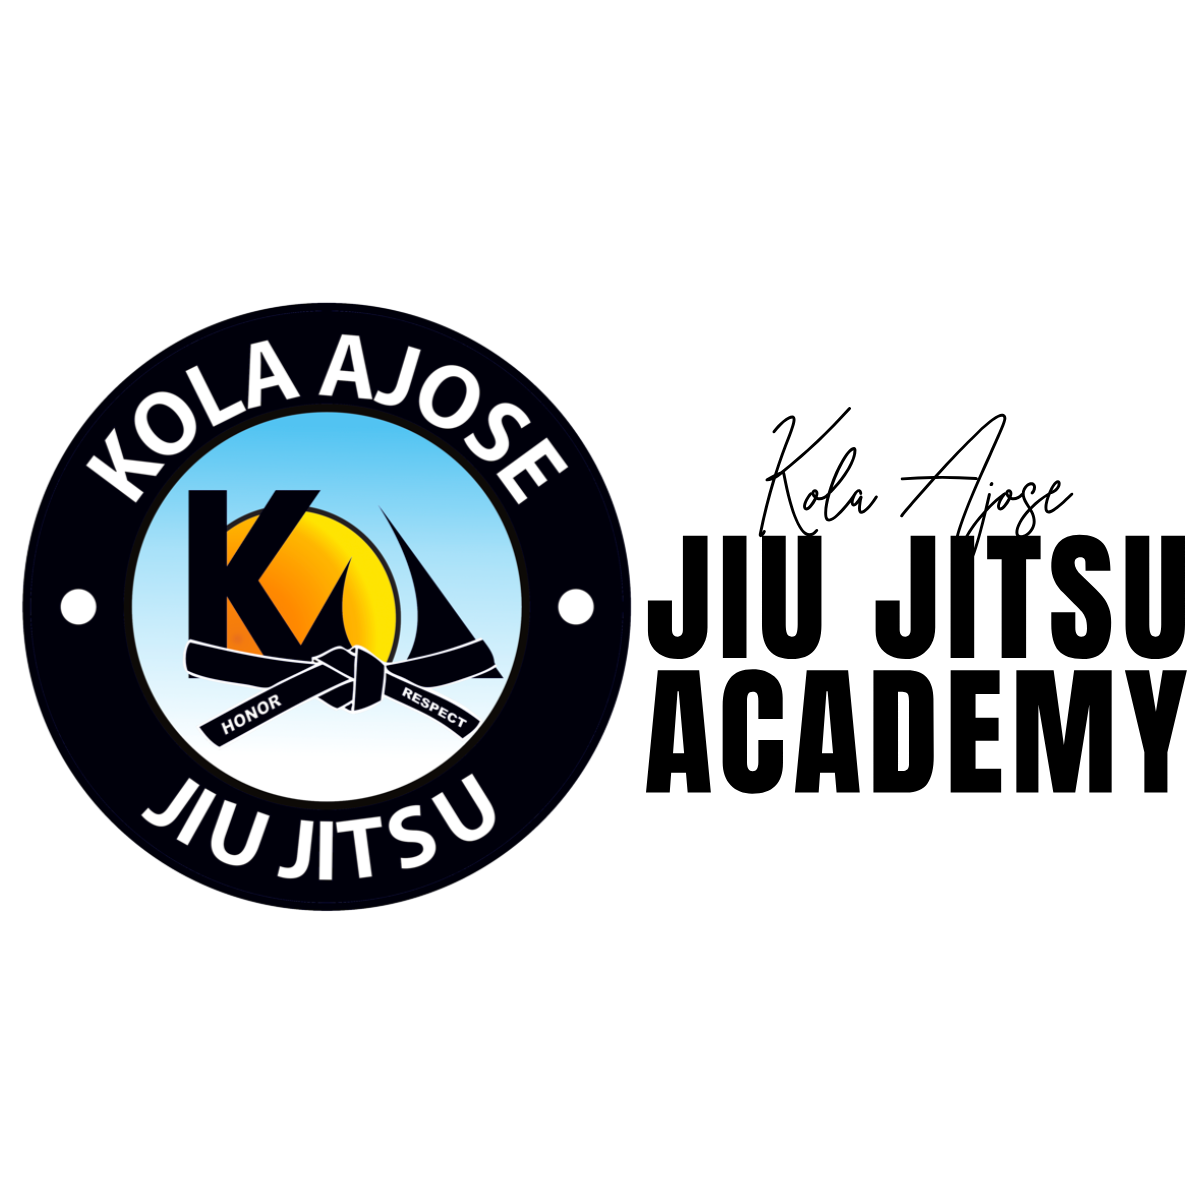 Kola Ajose Jiu Jitsu Academy